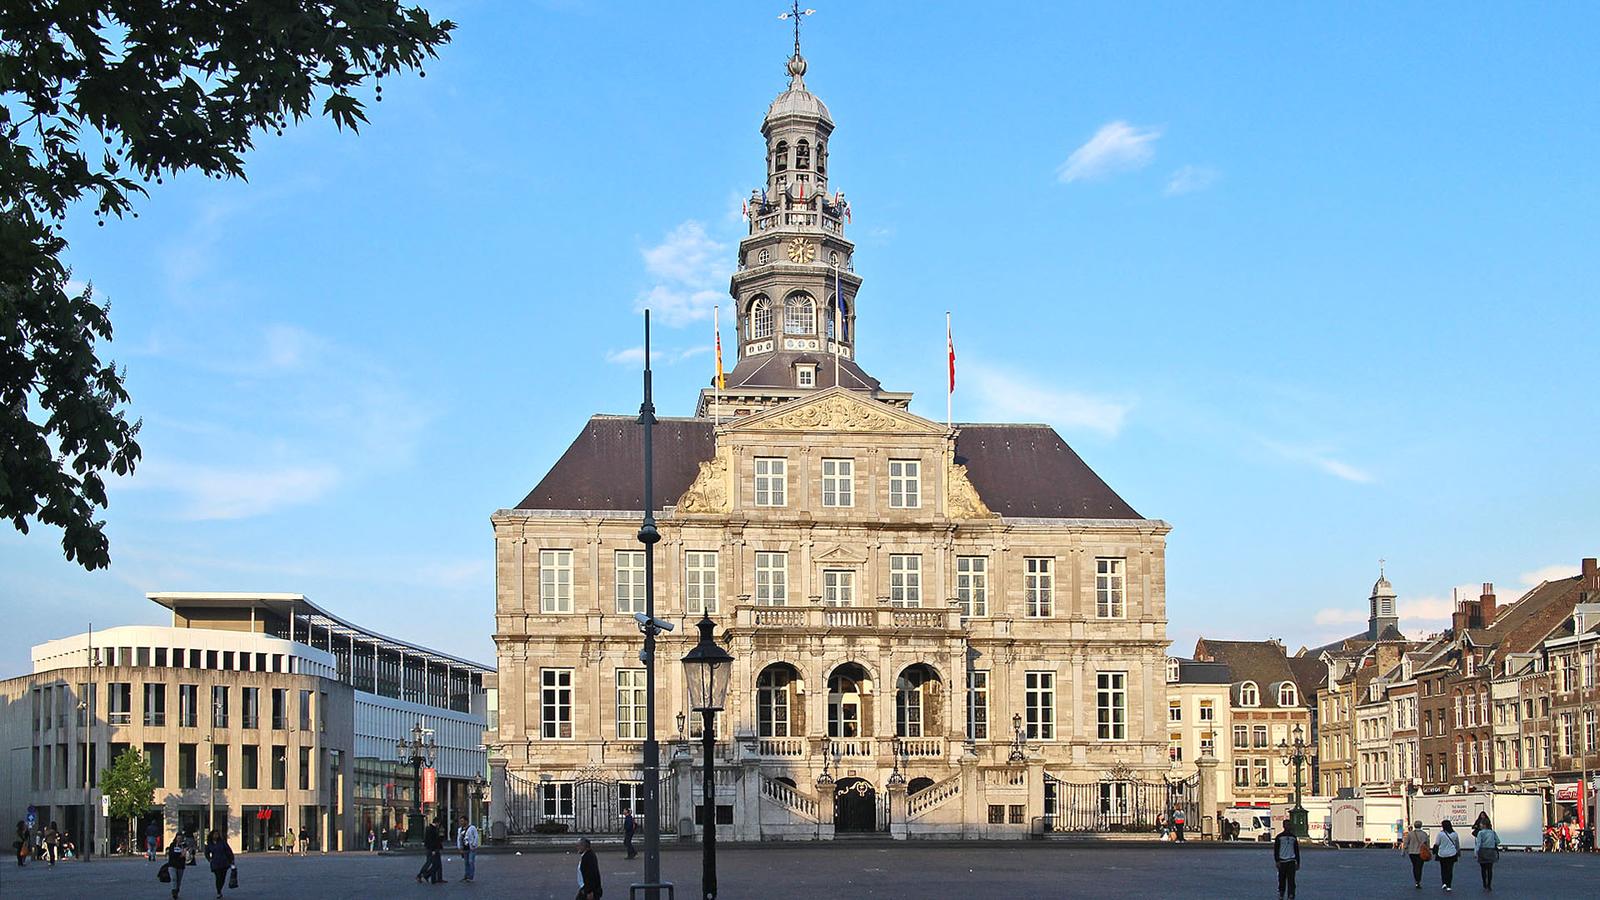 Maastricht, The Netherlands, Маастрихт, Нидерланды